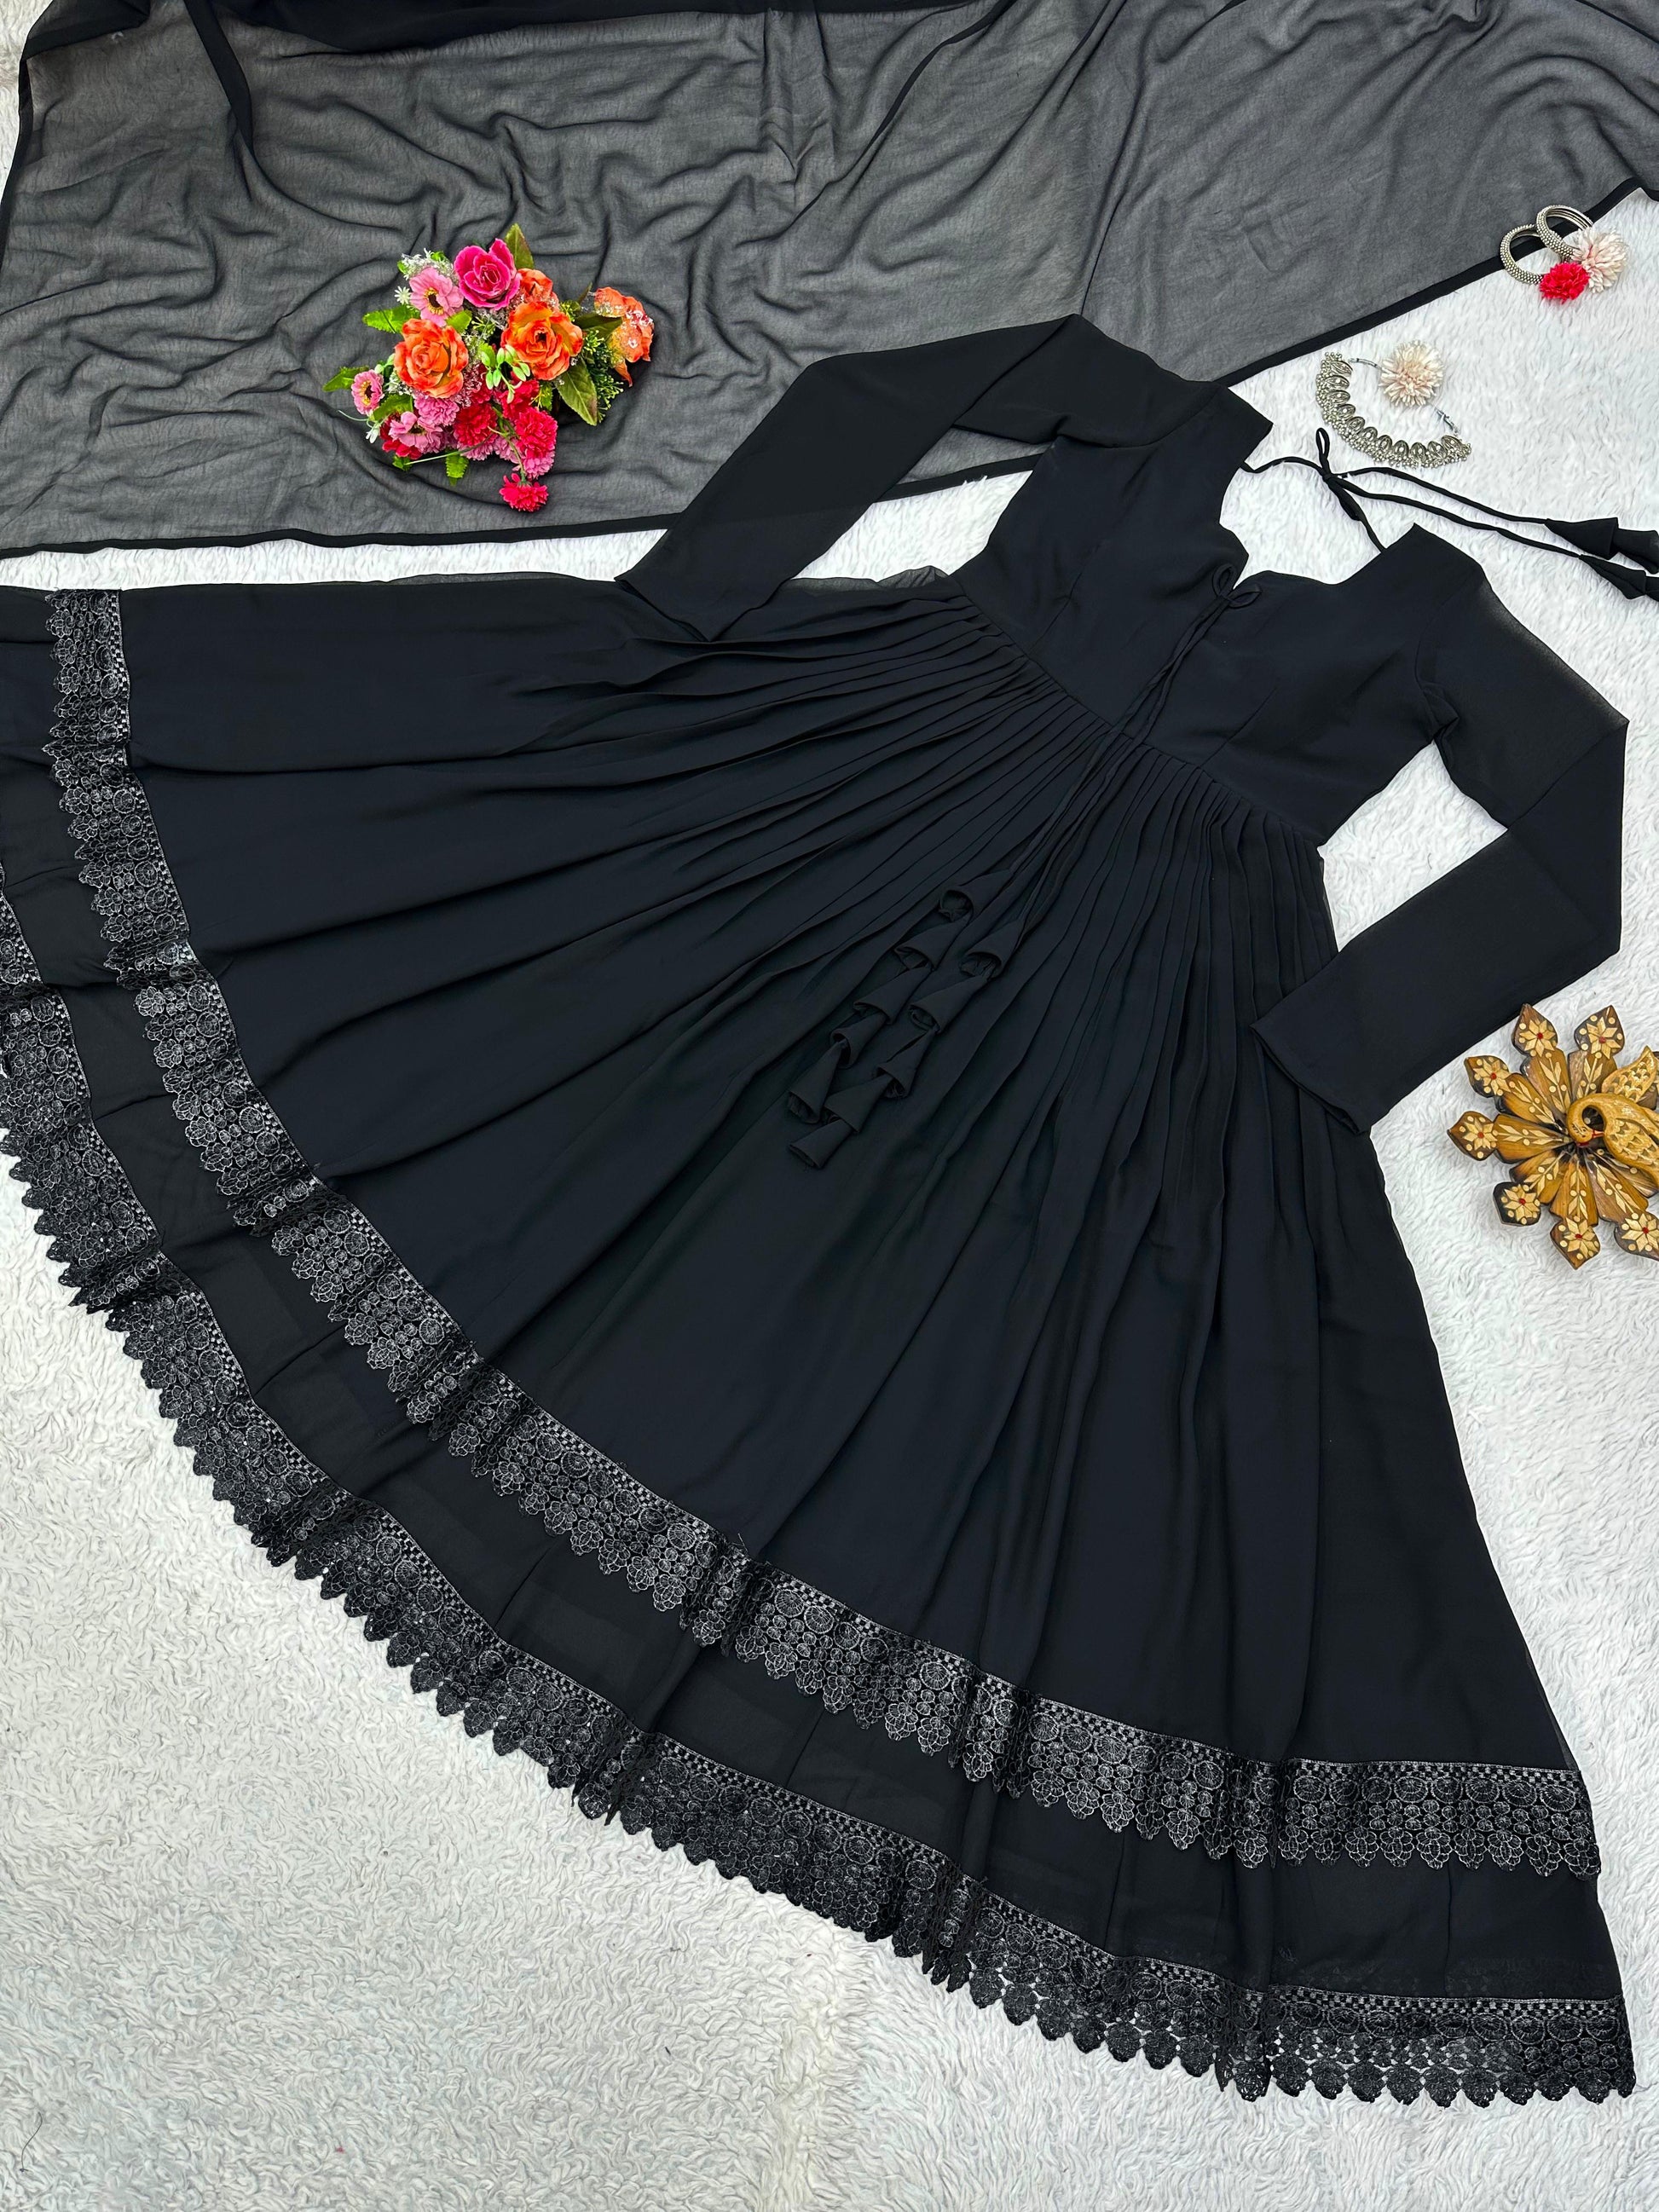  Women's Black Lace Dress